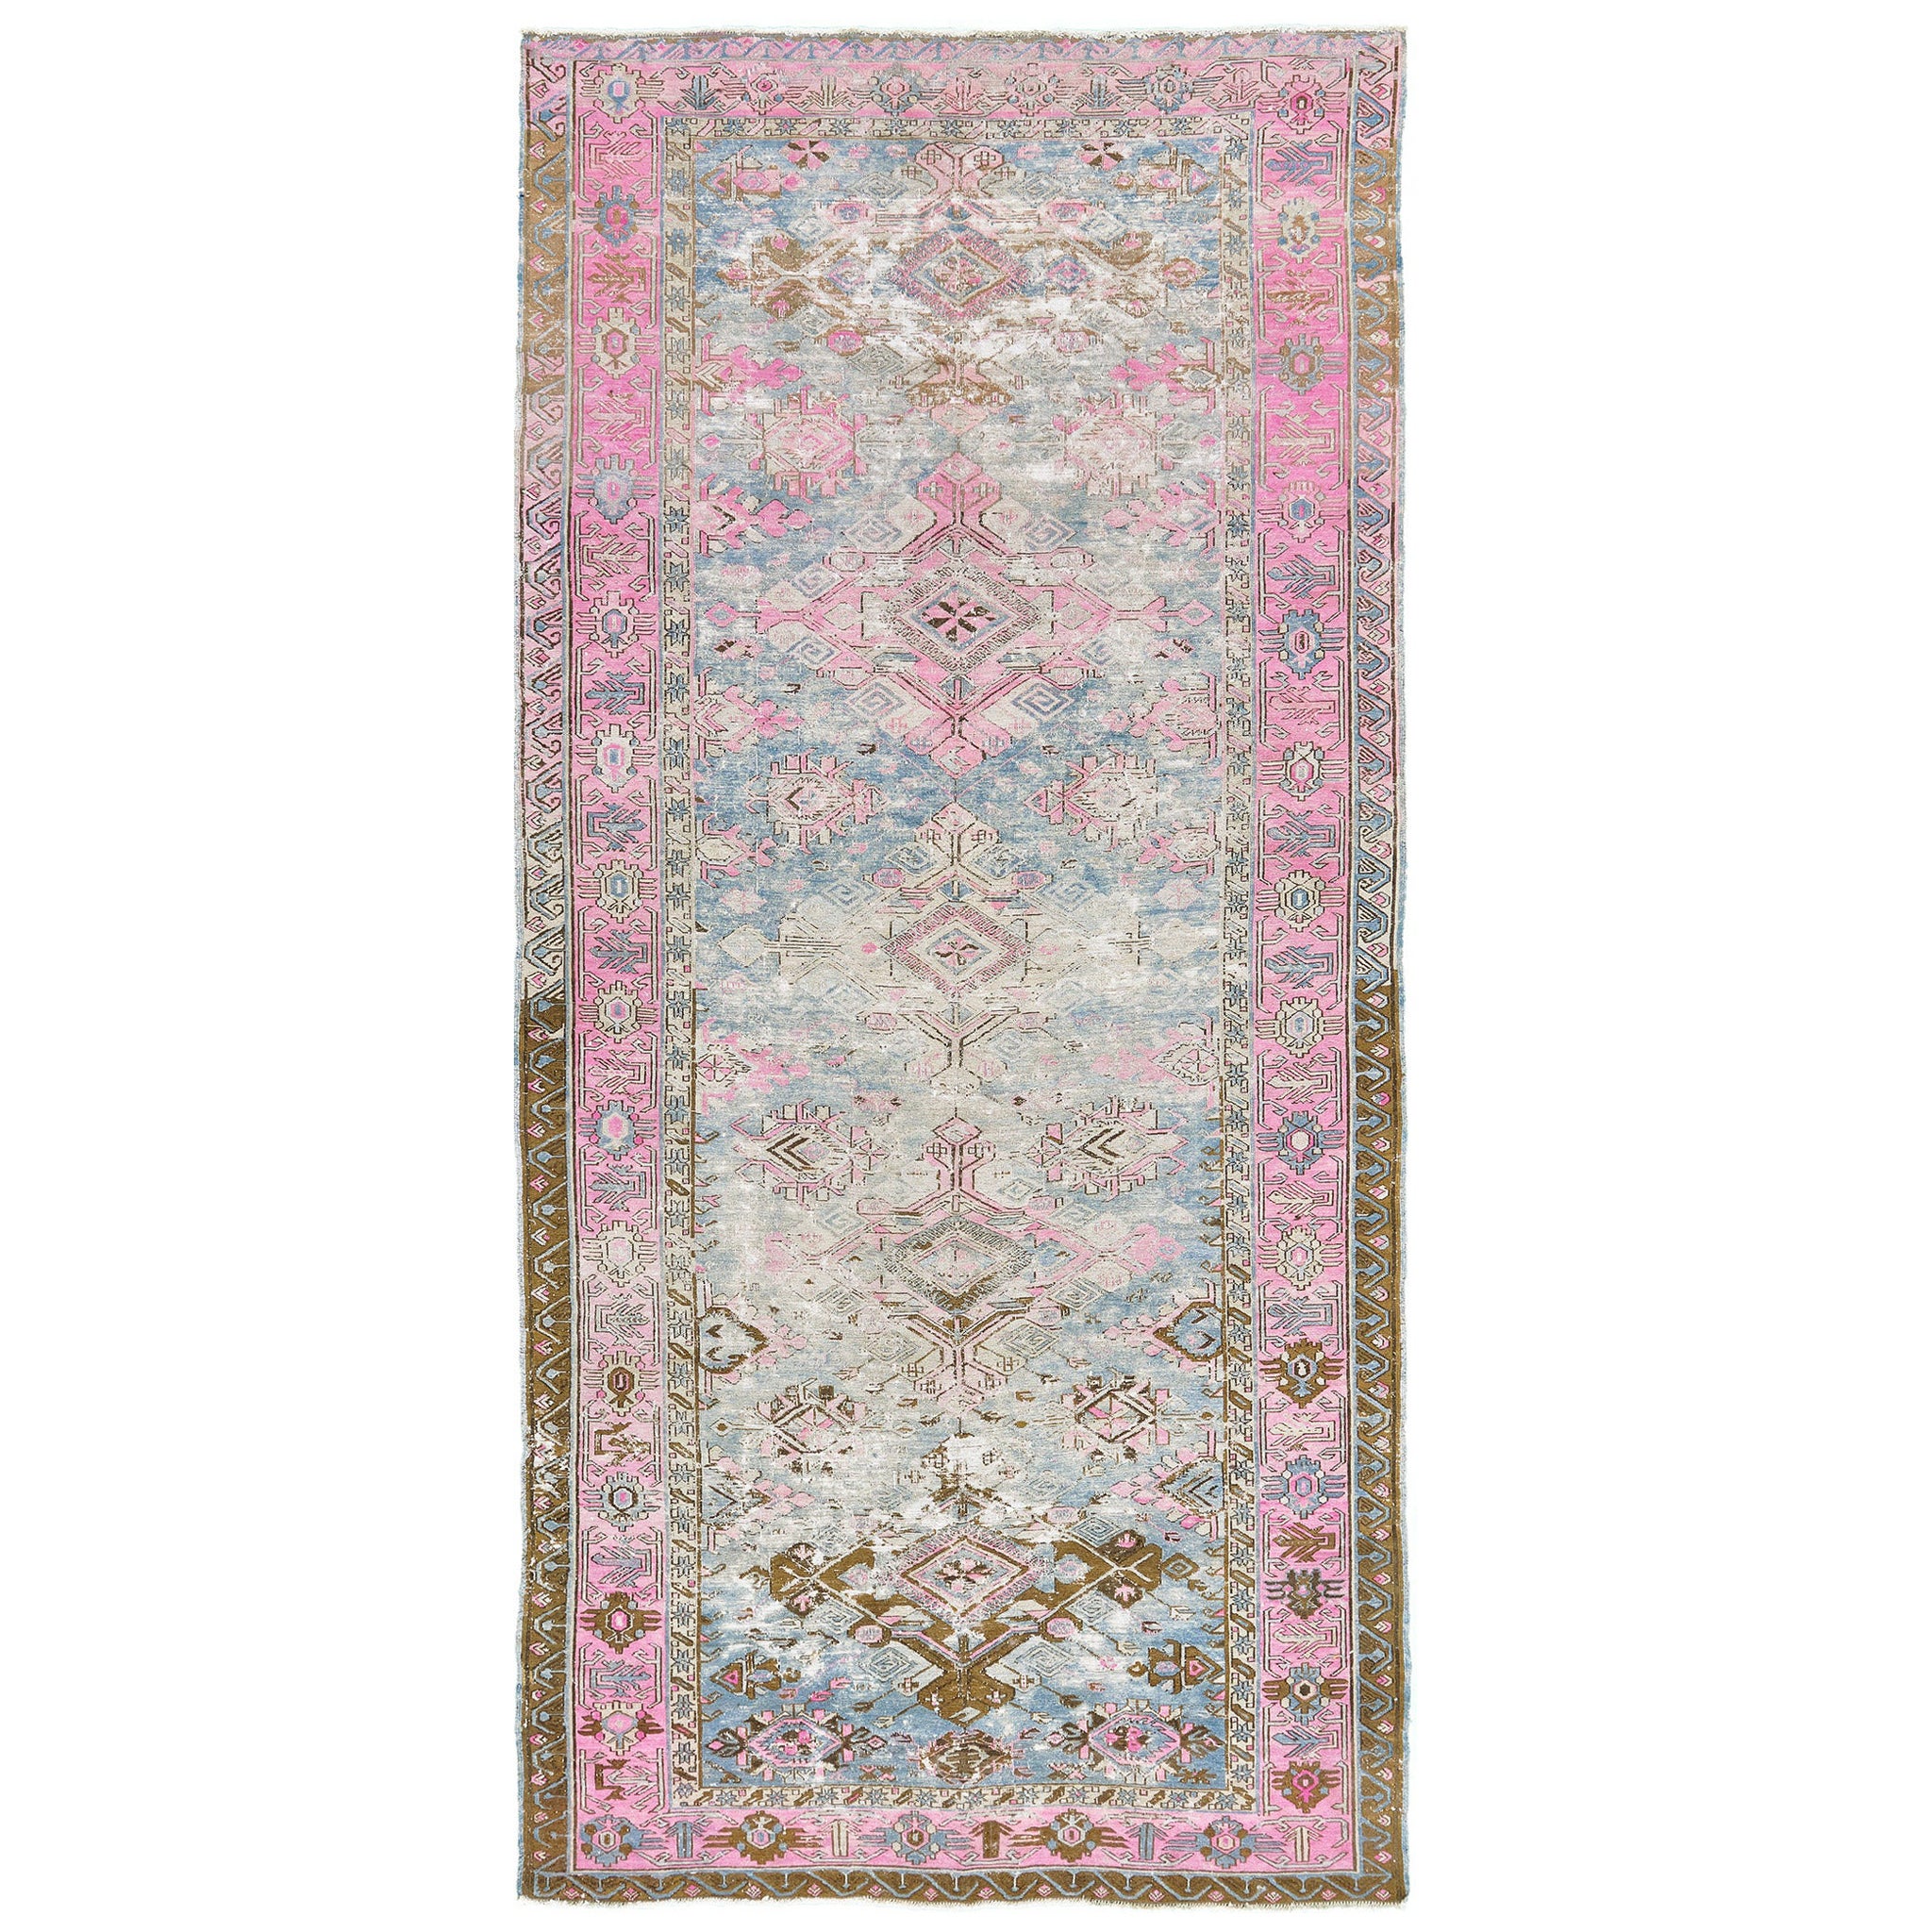 Antique Persian Soumak Rug 55399 For Sale